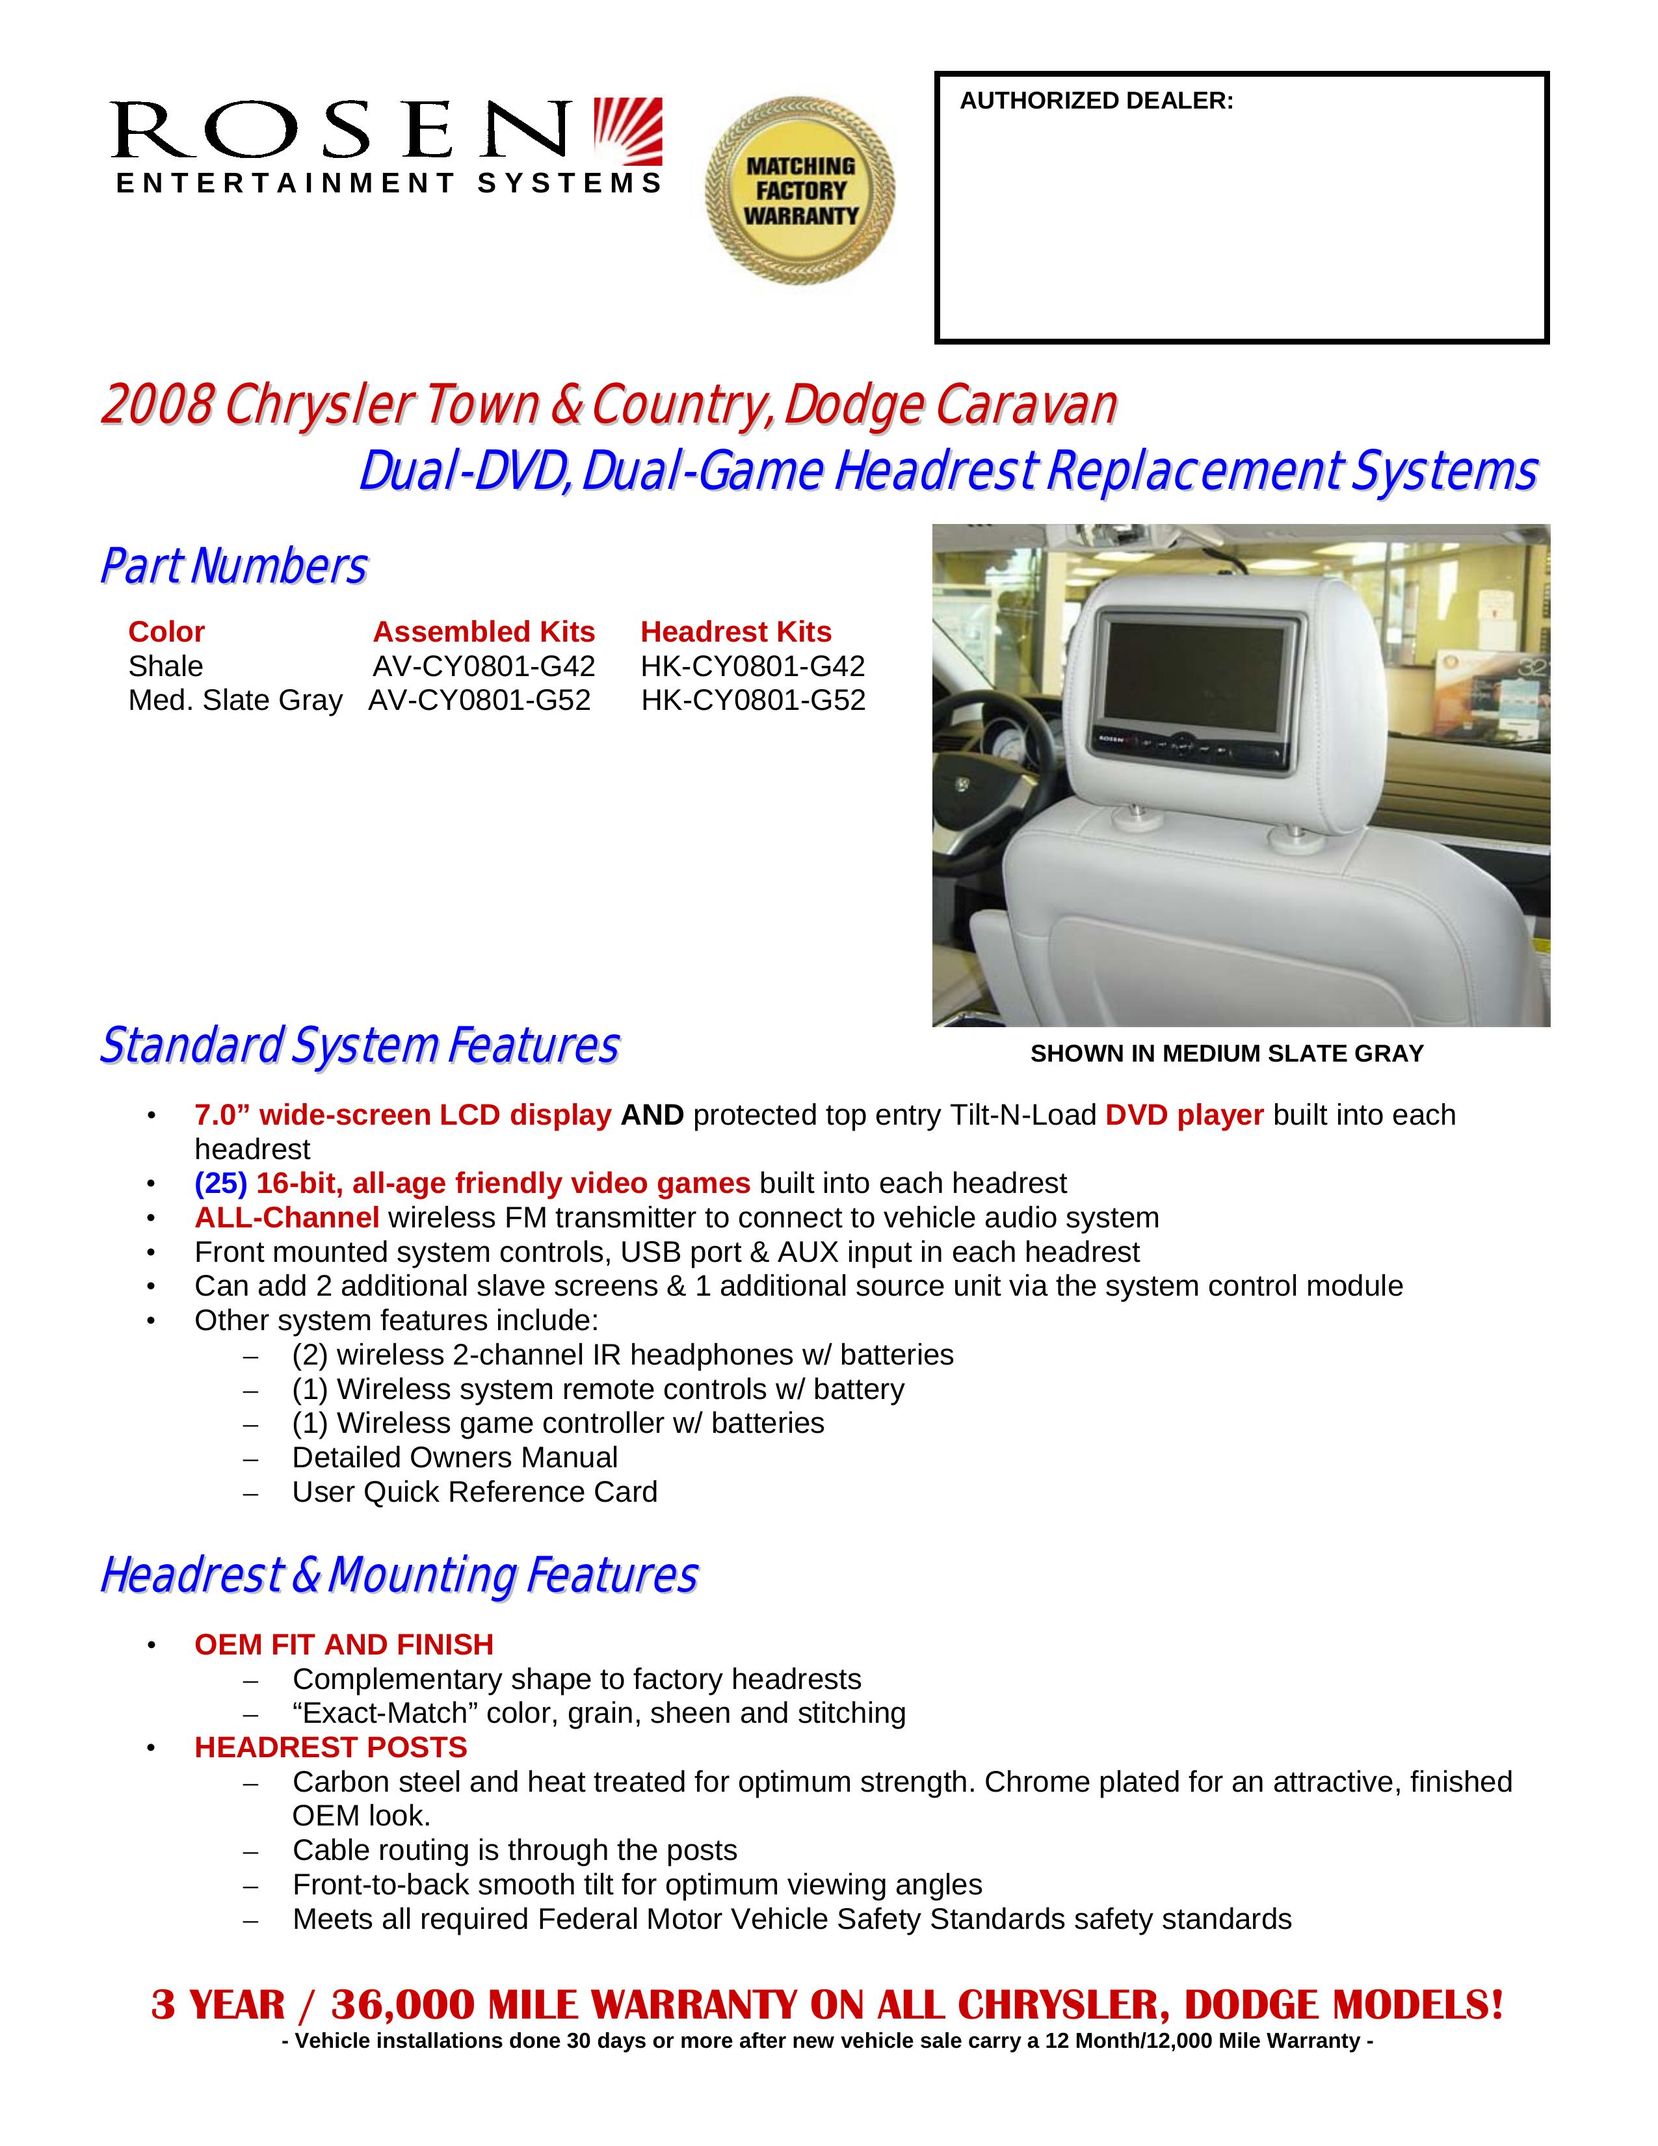 Rosen Entertainment Systems AV-CY0801-G42 Car Video System User Manual